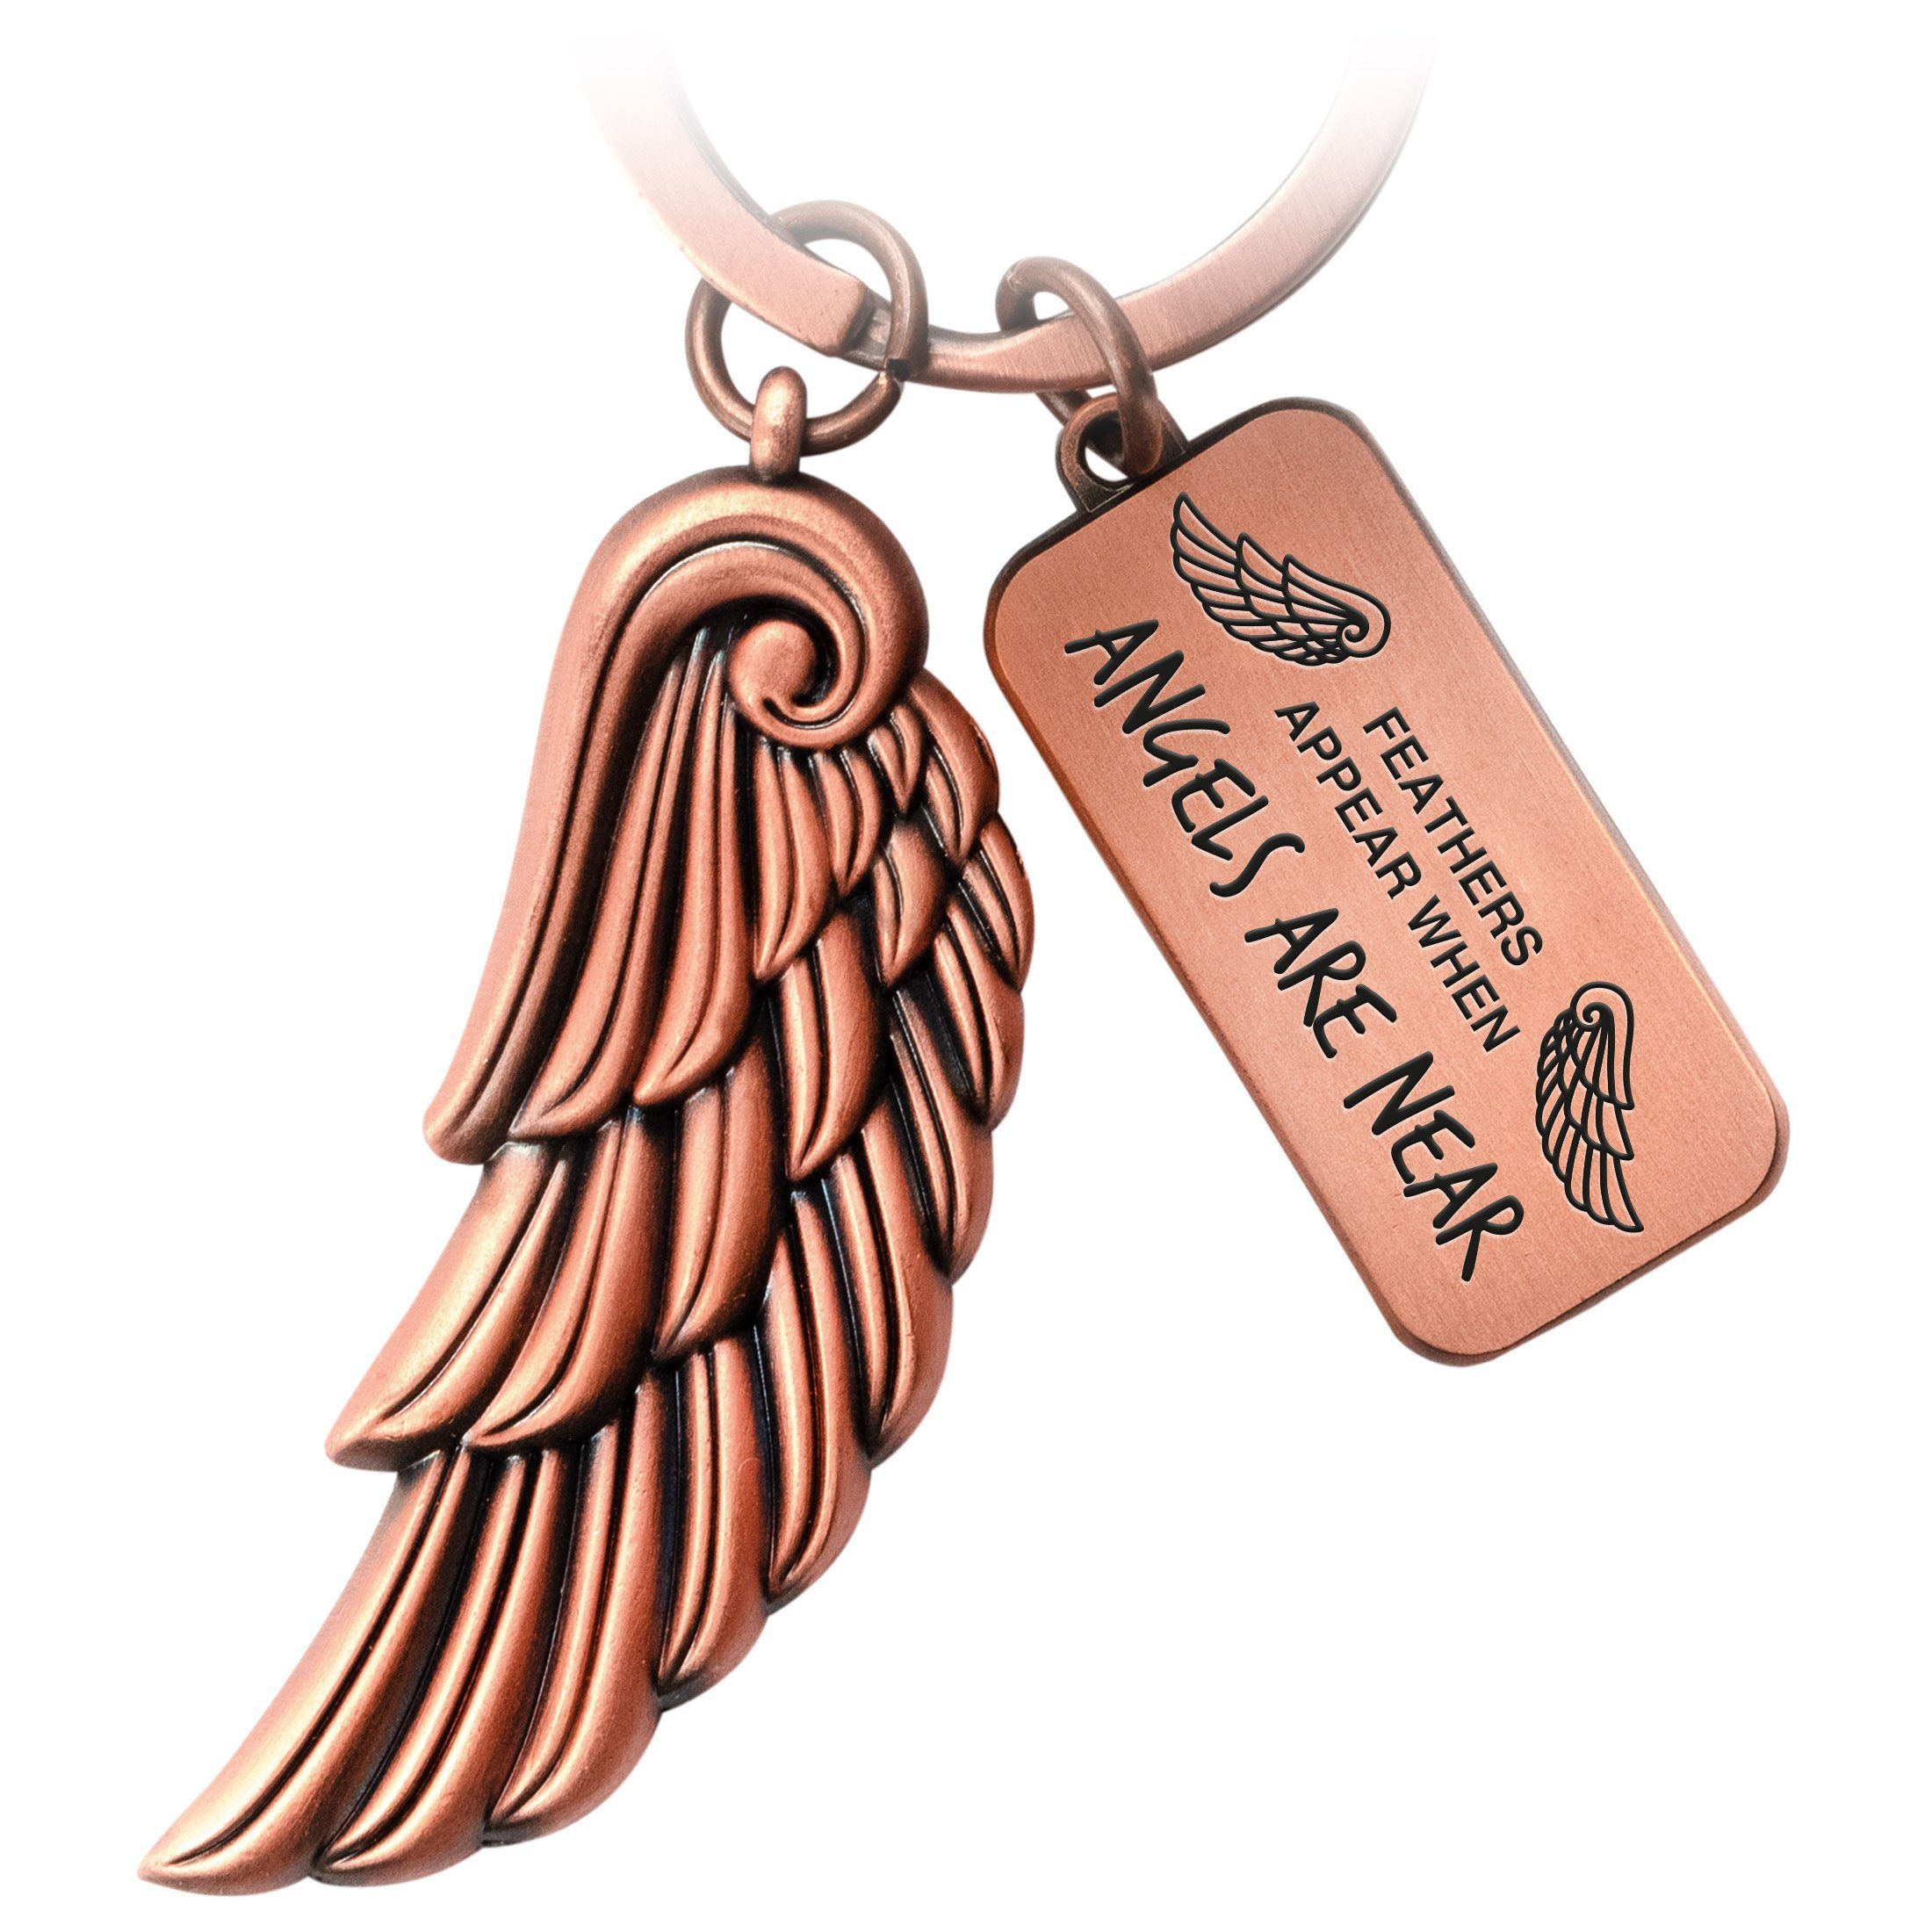 FABACH Schlüsselanhänger Engelsflügel Angel mit Gravur - Angels Are Near - Schutzengel Geschenk Antique Roségold